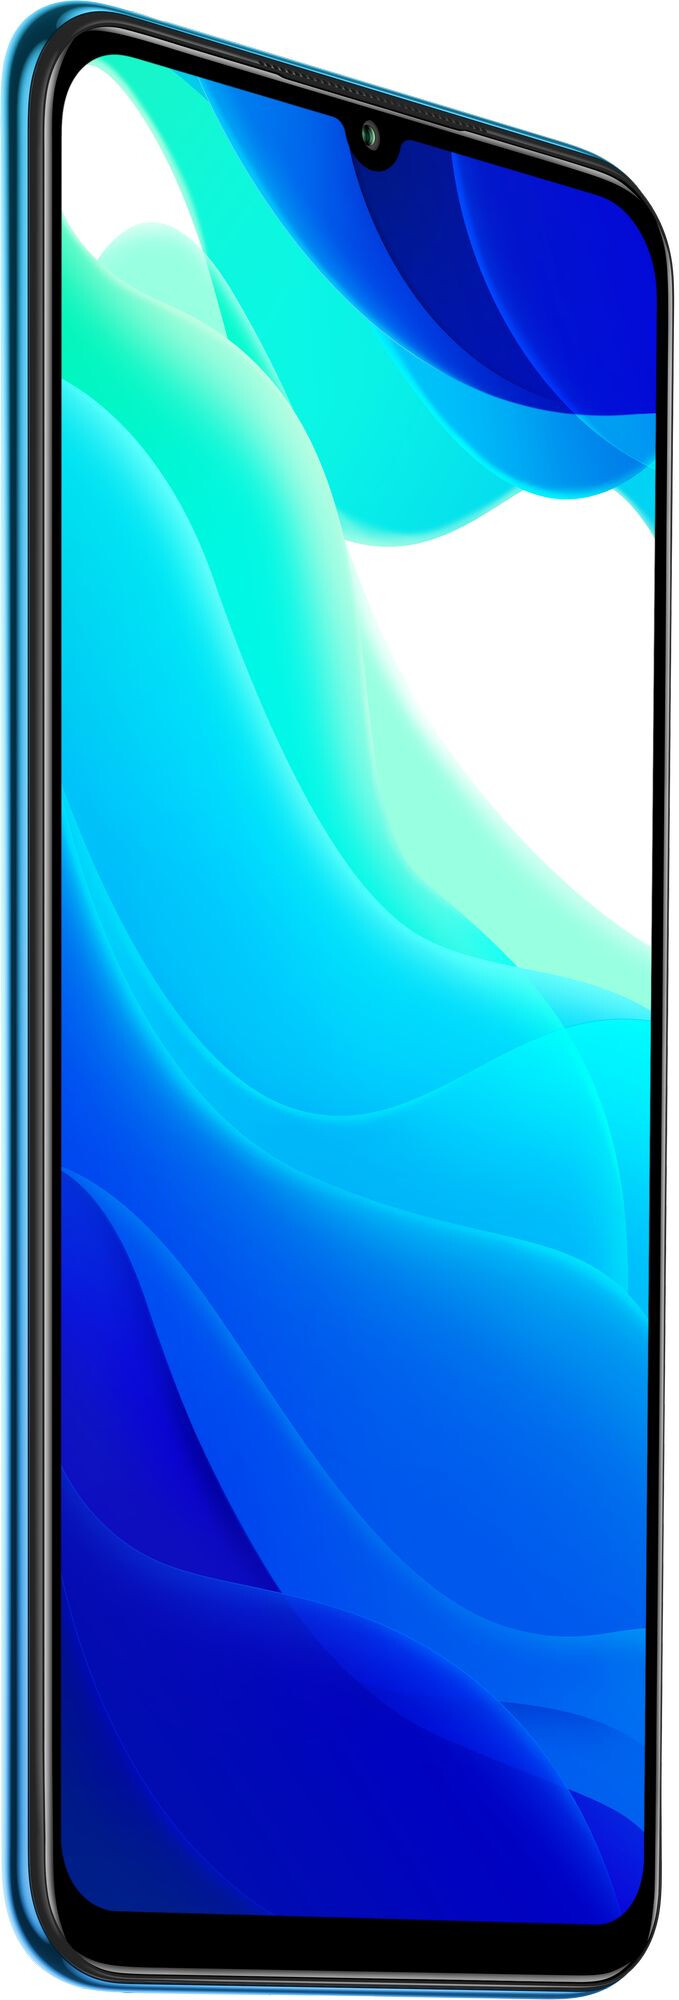 Смартфон Xiaomi Mi 10 Lite 6/64GB Blue (Синий)